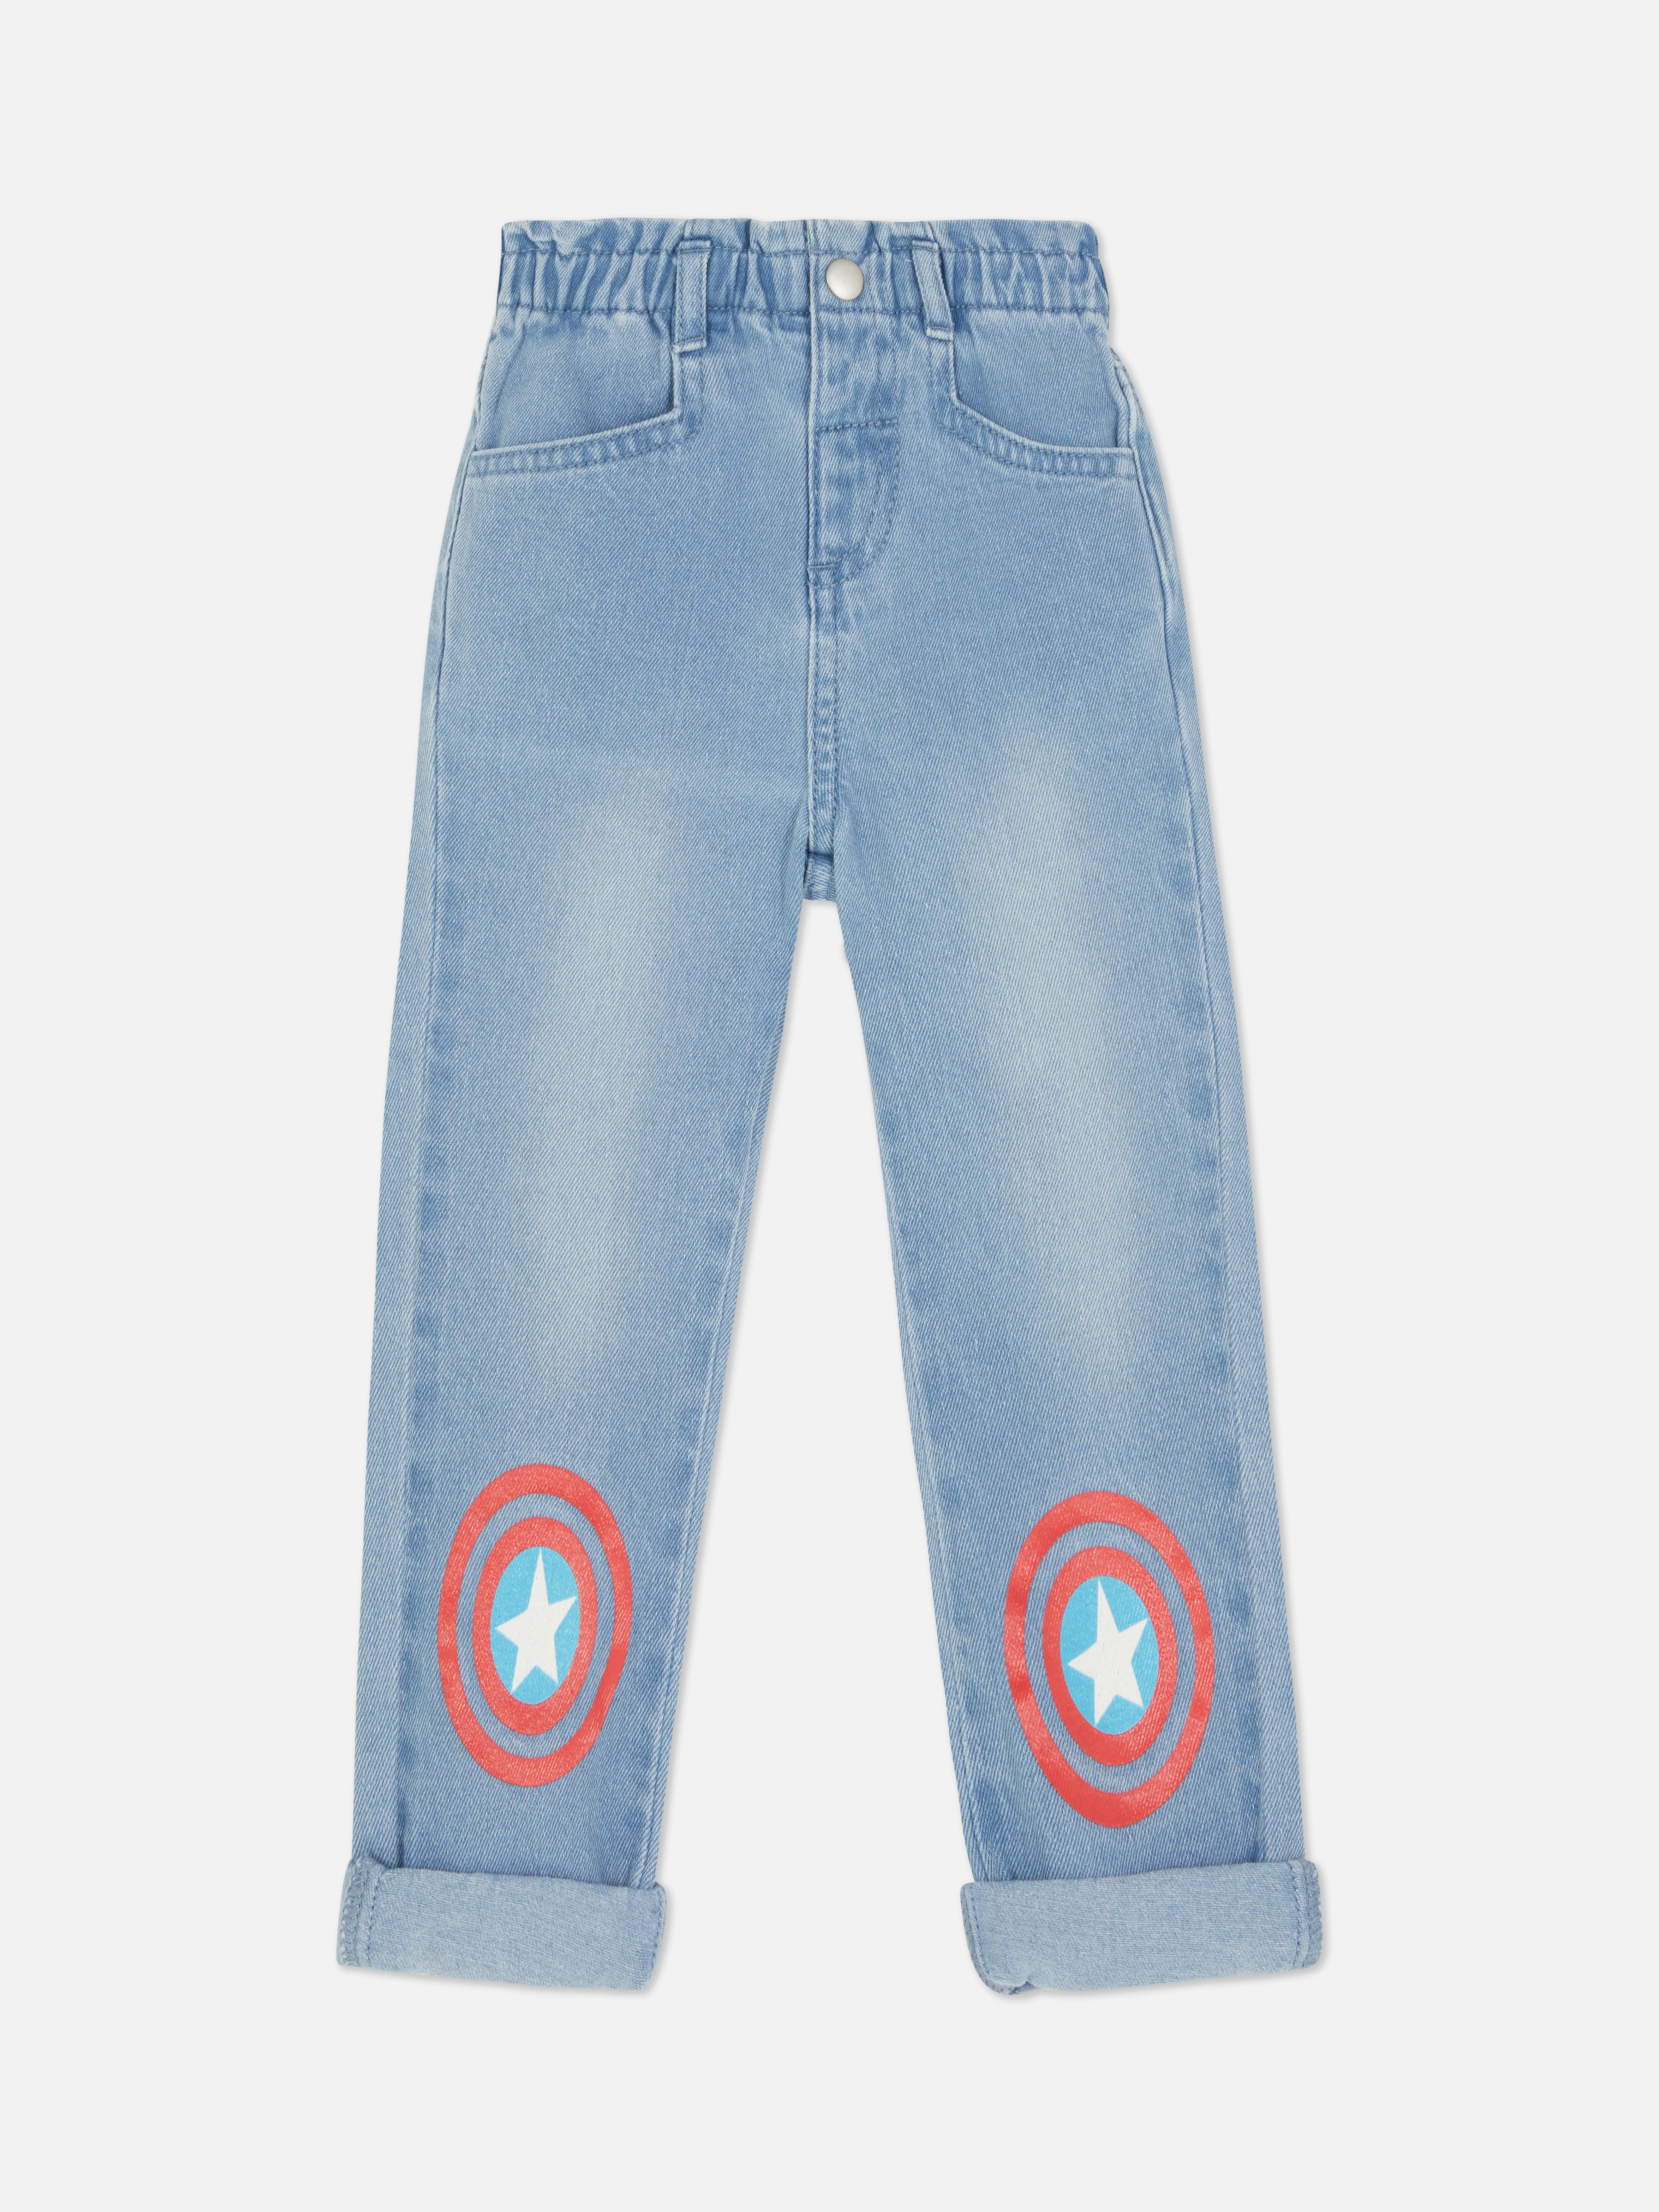 Marvel Captain America Jeans